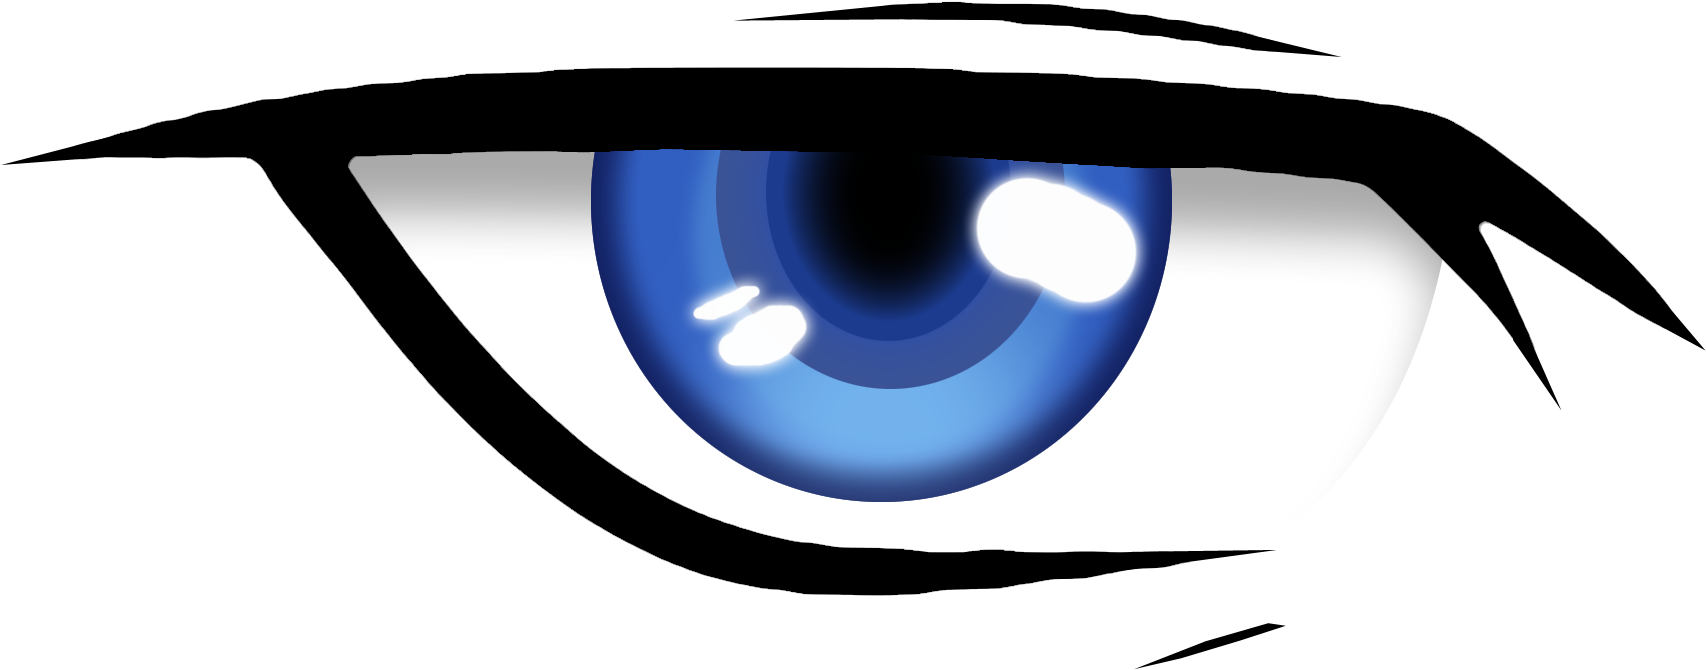 Download Eyes Anime Free Transparent Image HD HQ PNG Image | FreePNGImg